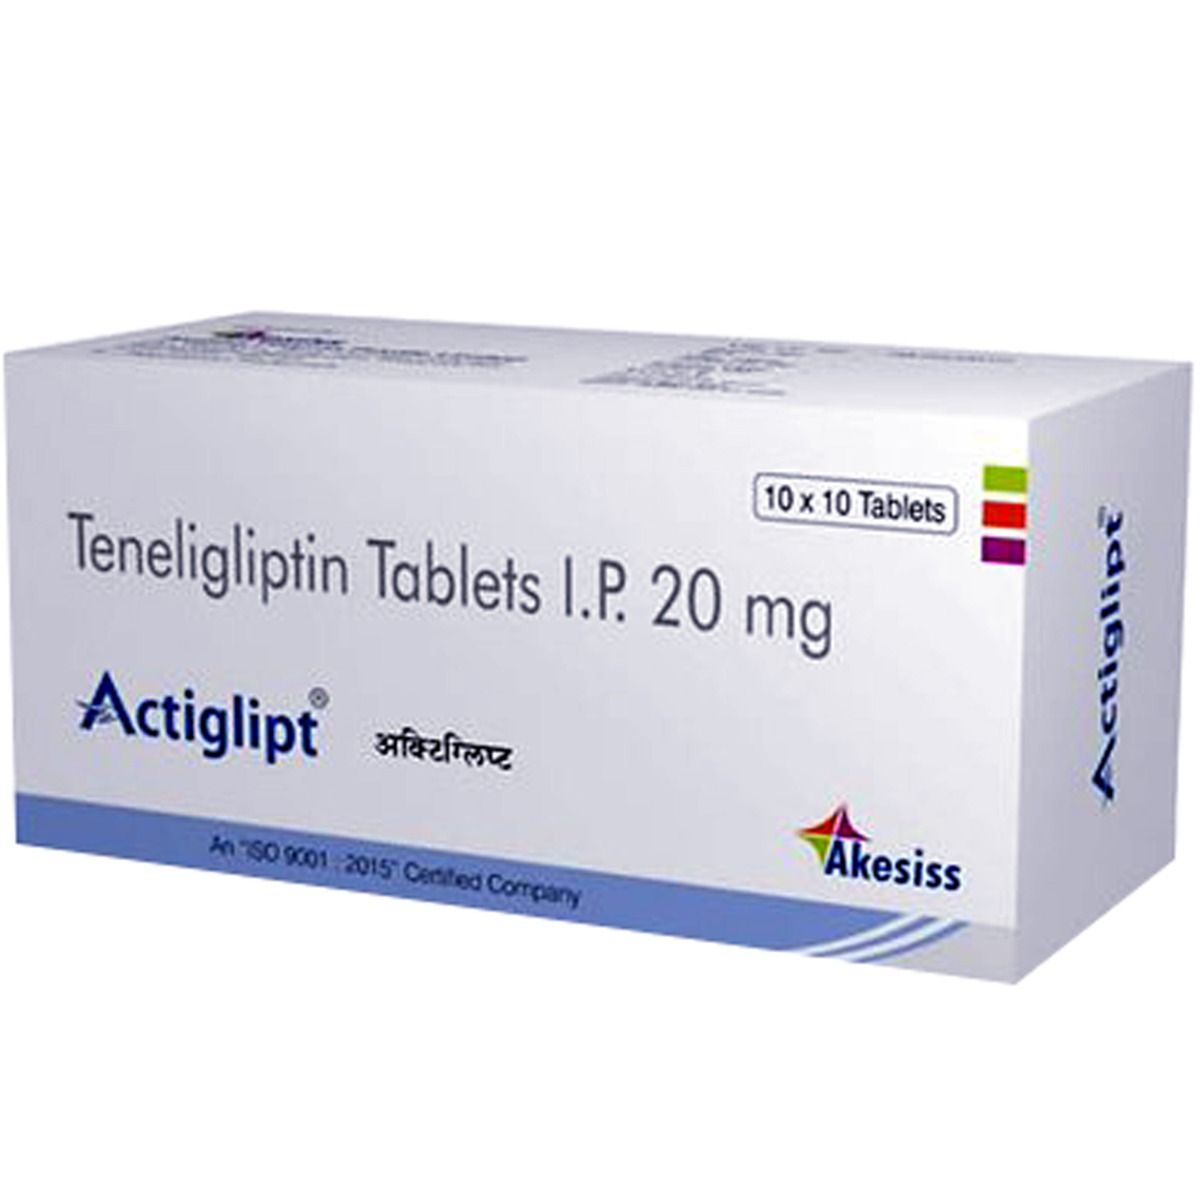 Actiglipt 20 Tablet 10's, Pack of 10 TABLETS